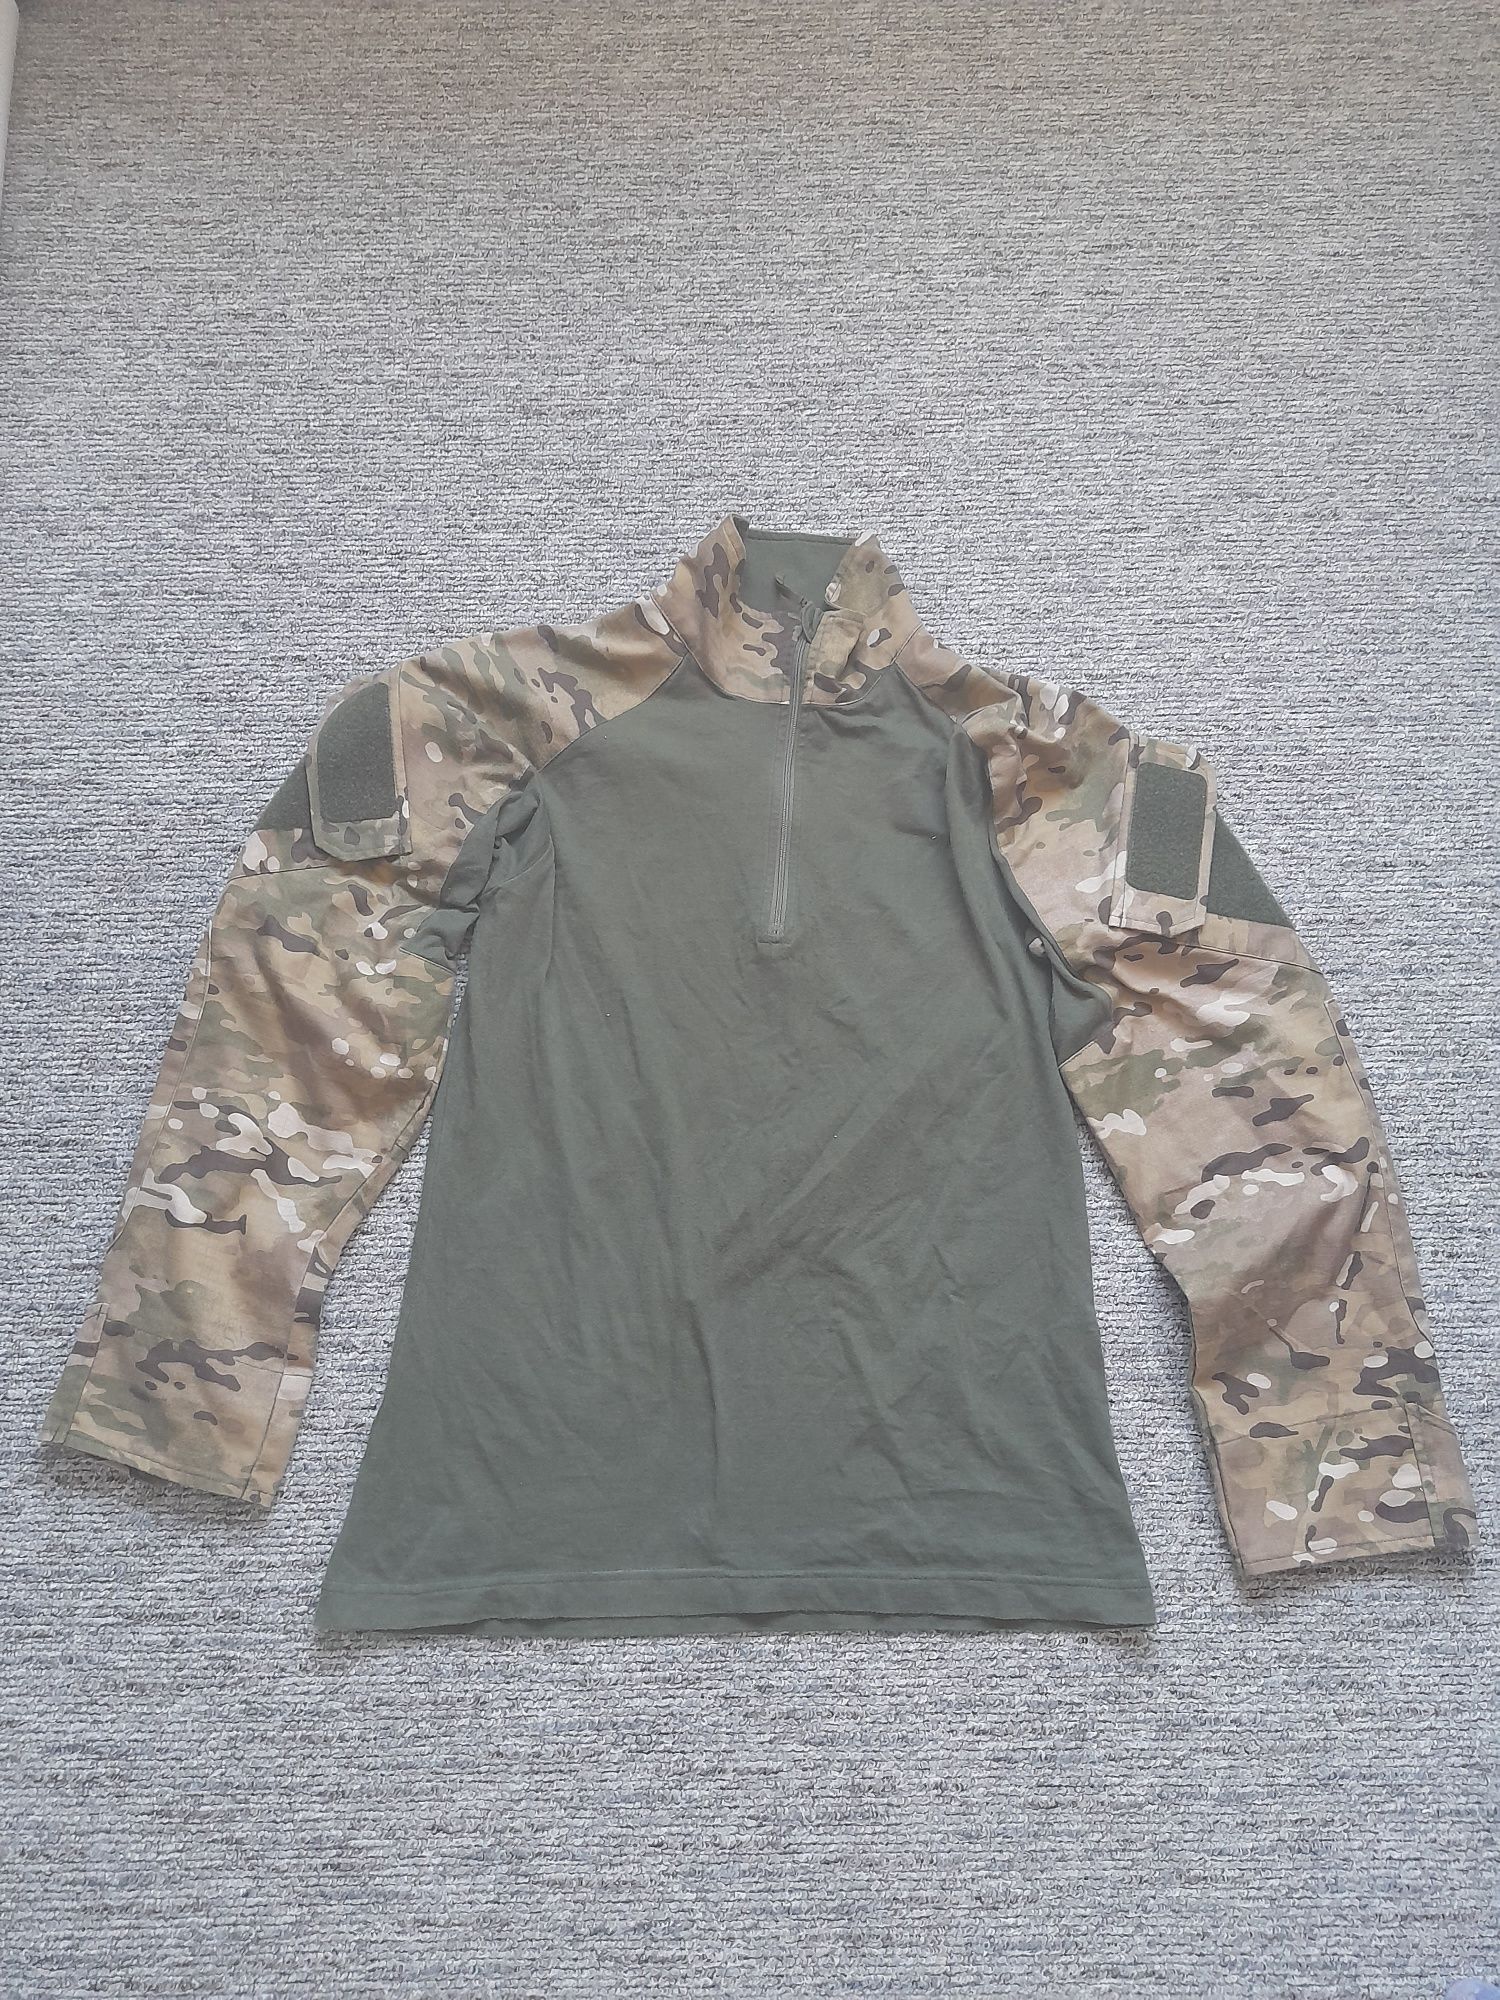 Combat shirt, koszulobluza pod kamizelkę ochronną ws nr. 115/dkws